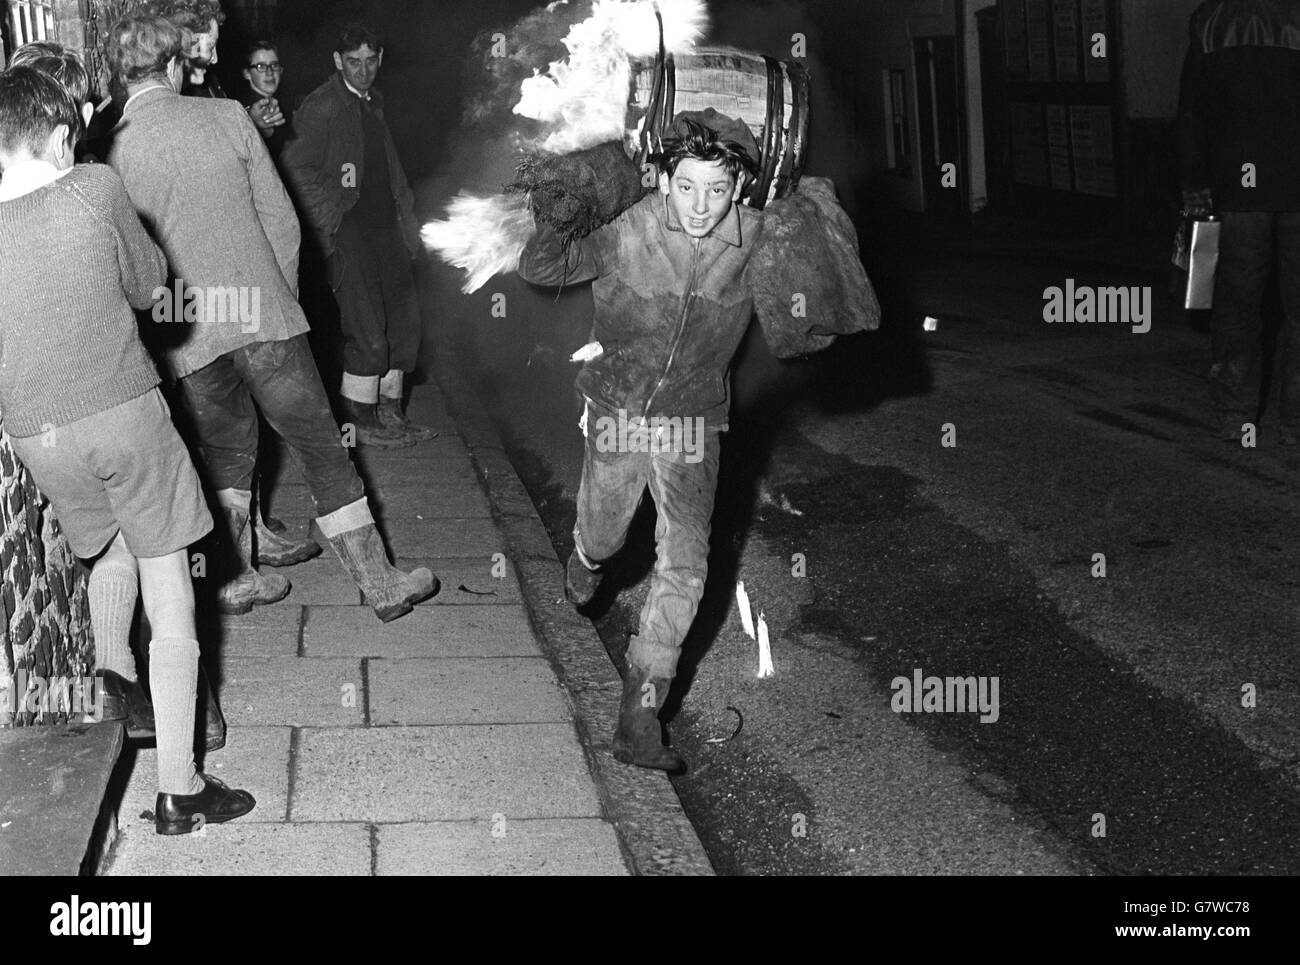 Tar Barrel Burning Ceremony - Ottery St Mary's. A boy carries a barrel through the street. Stock Photo